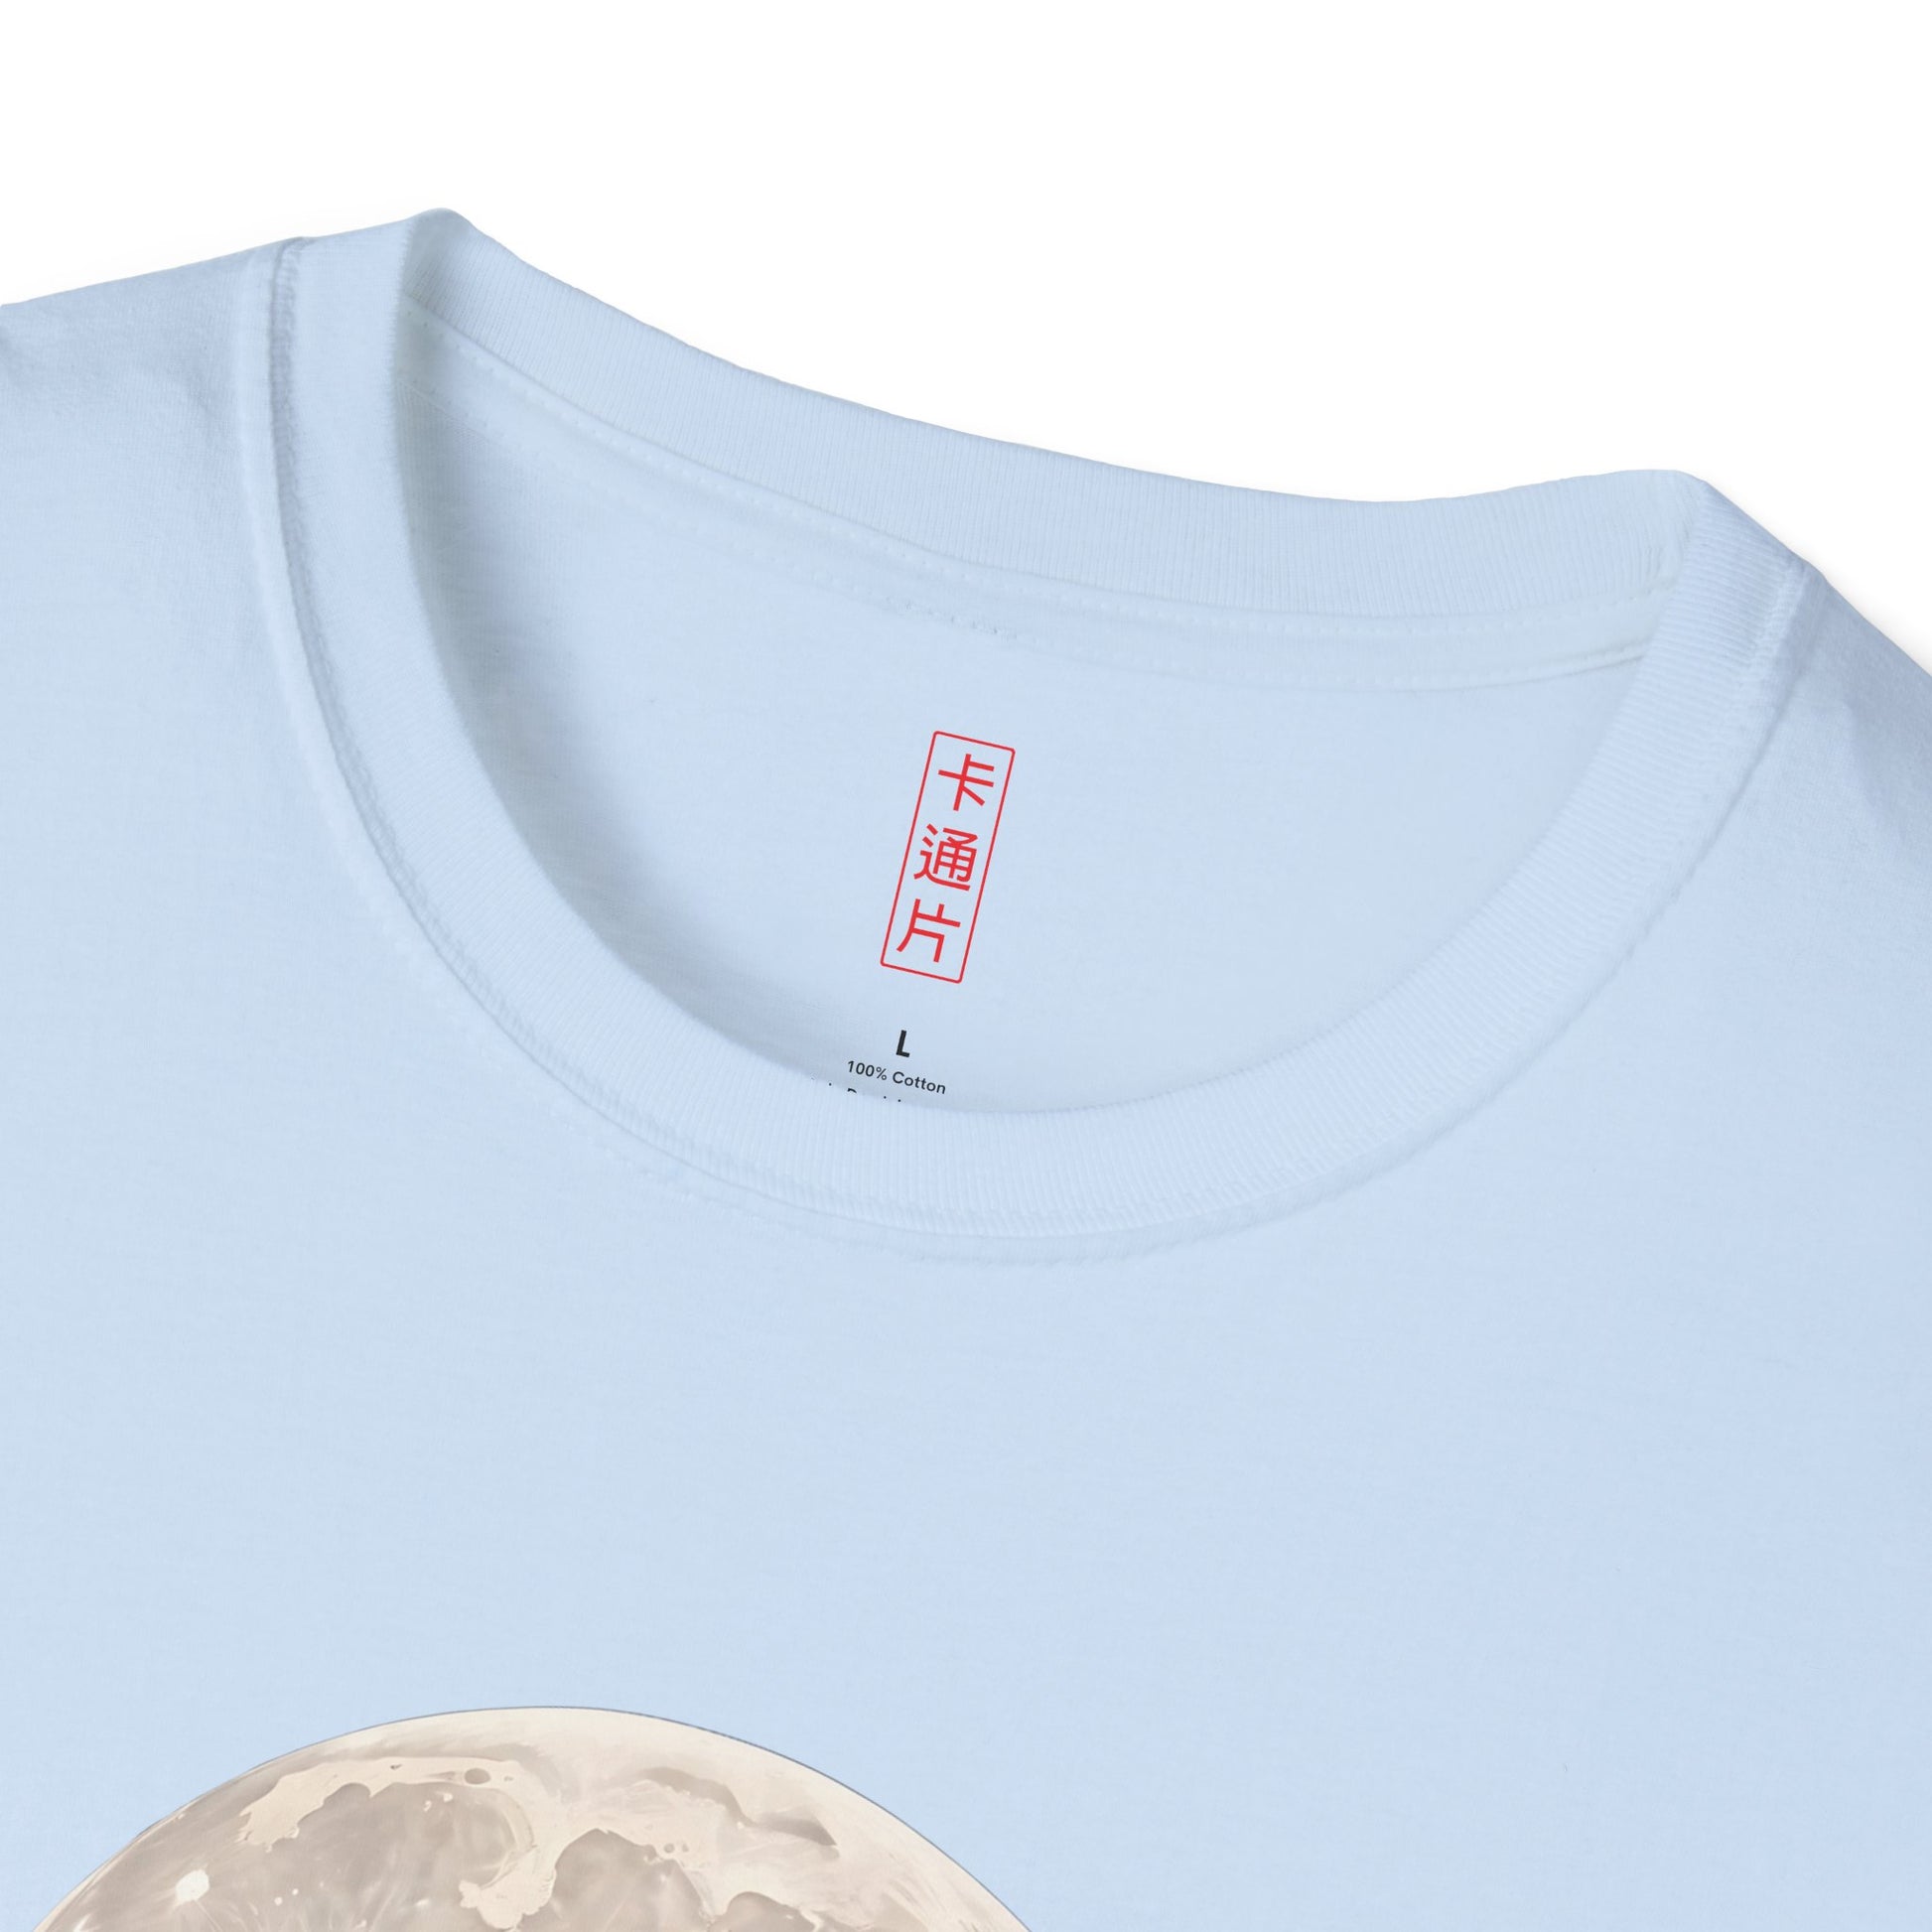 Kǎtōng Piàn - Vampires Collection - 008 - Unisex Softstyle T-Shirt Printify